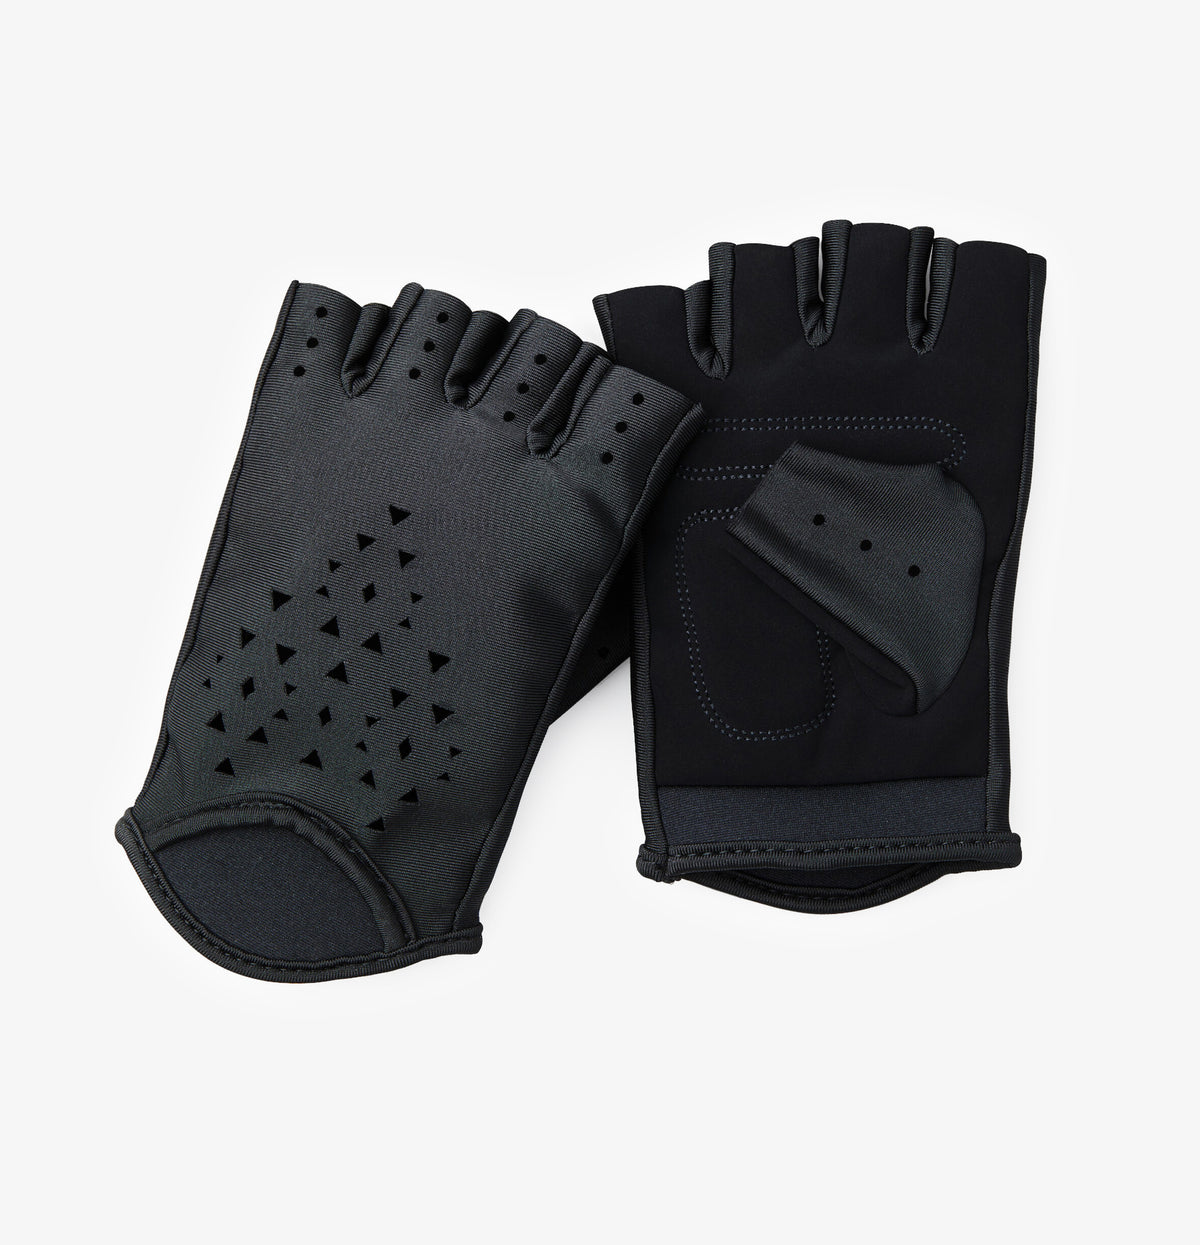 Lasercut Training Gloves